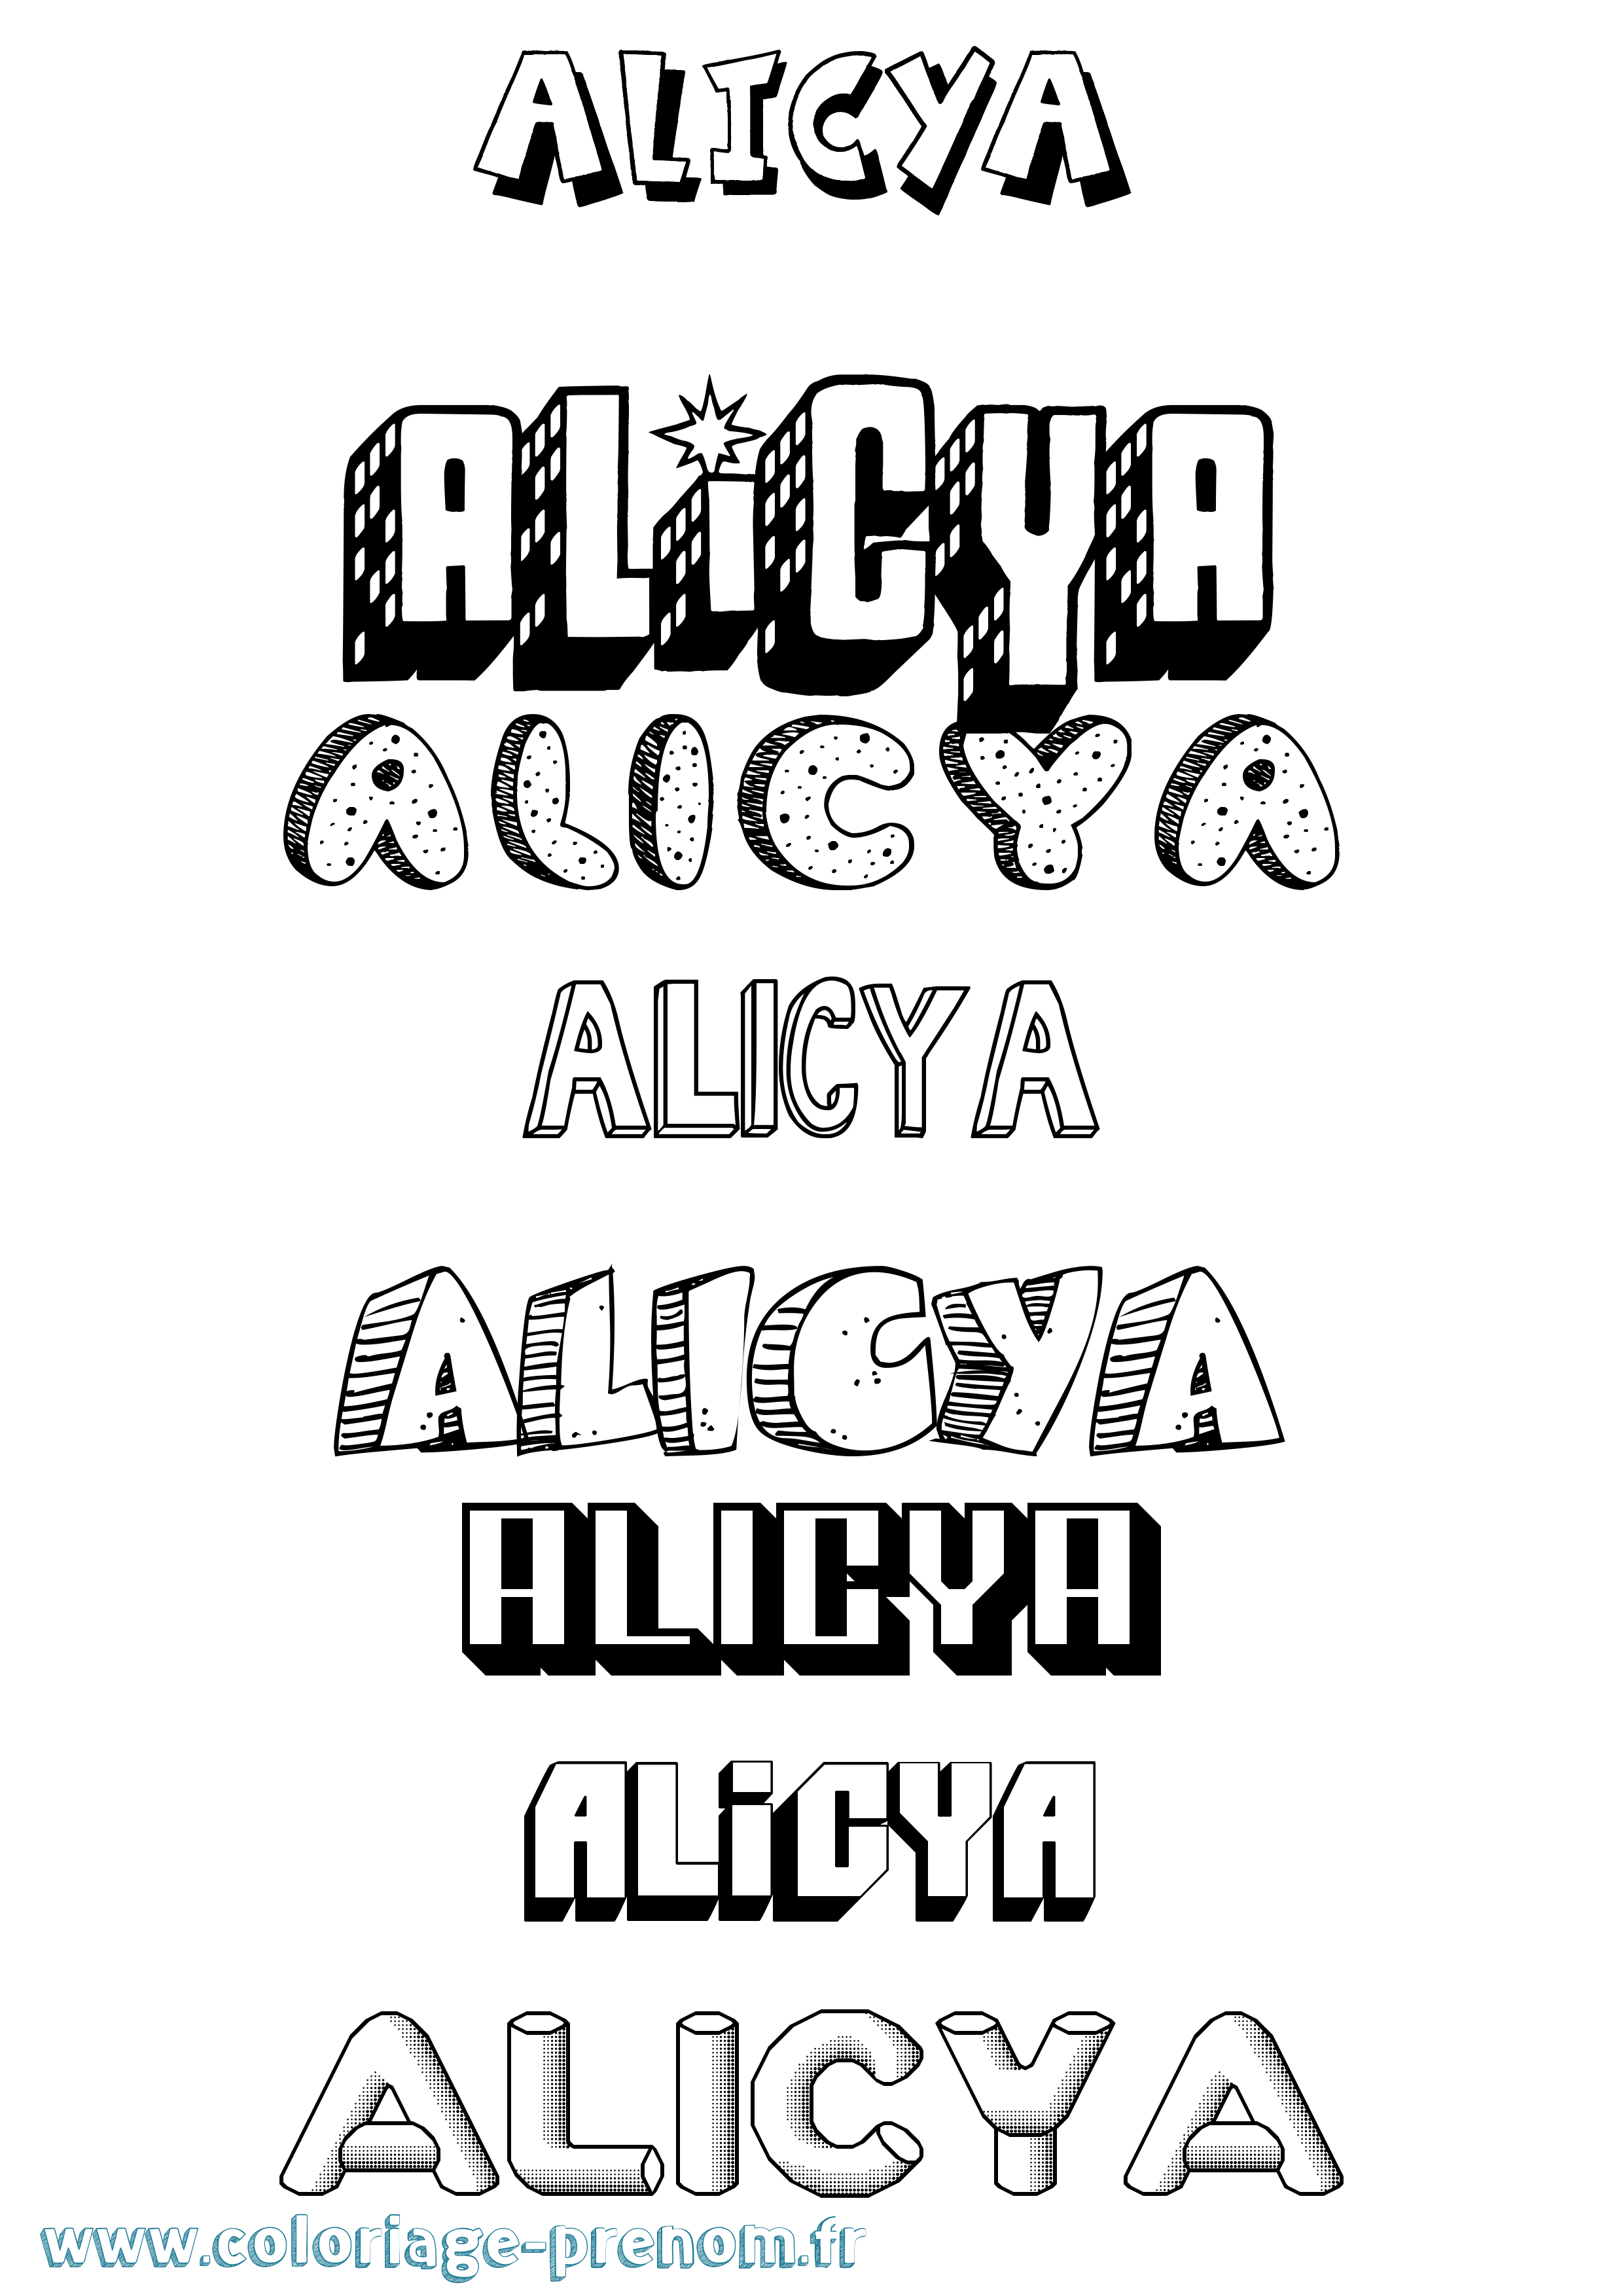 Coloriage prénom Alicya Effet 3D